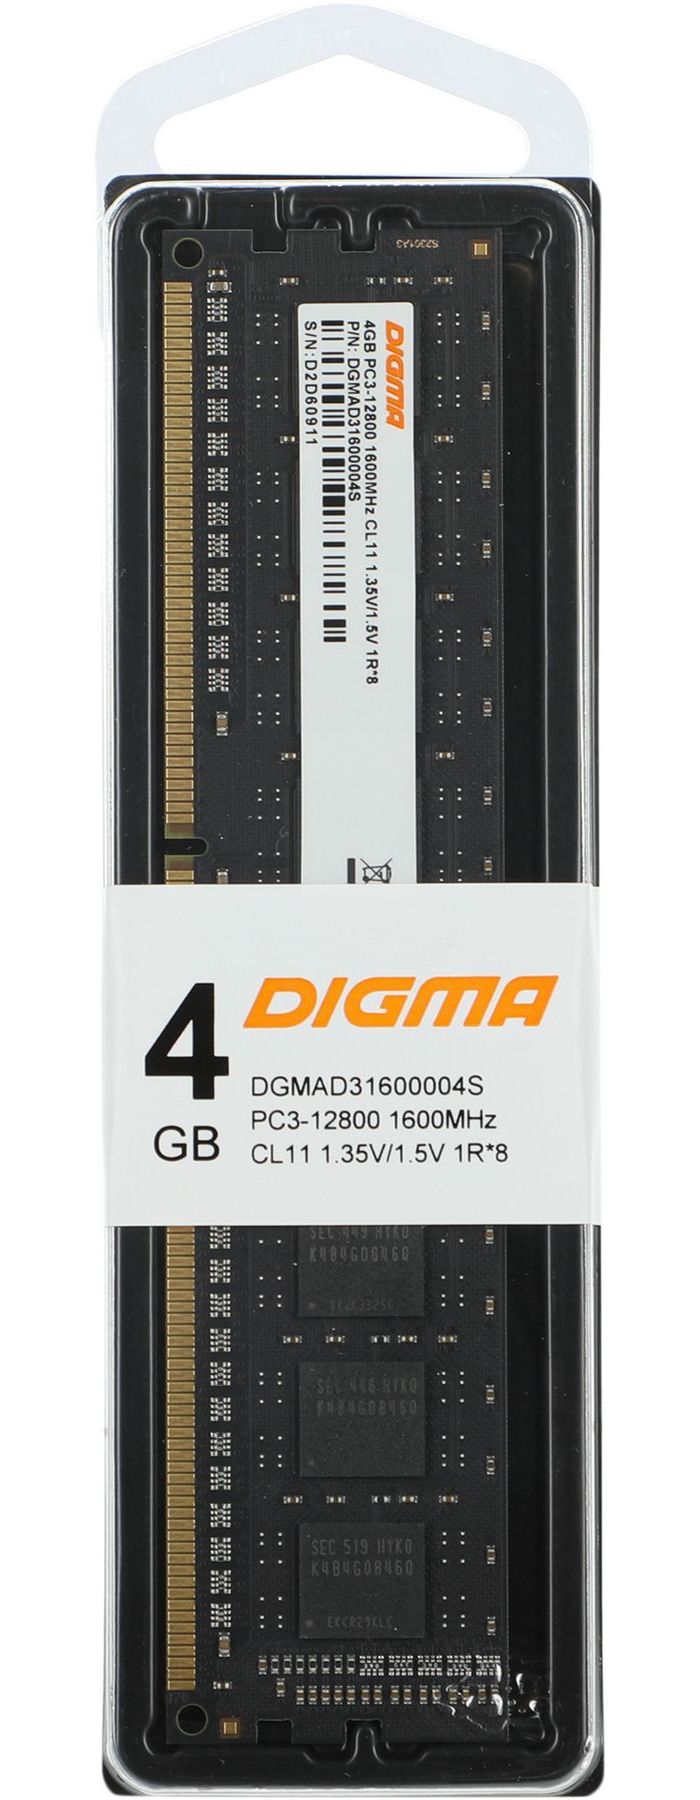 Оперативная память DDR3L Digma 4Gb 1600MHz DIMM (DGMAD31600004S) память оперативная ddr3l netac 8gb 1600mhz ntbsd3n16sp 08